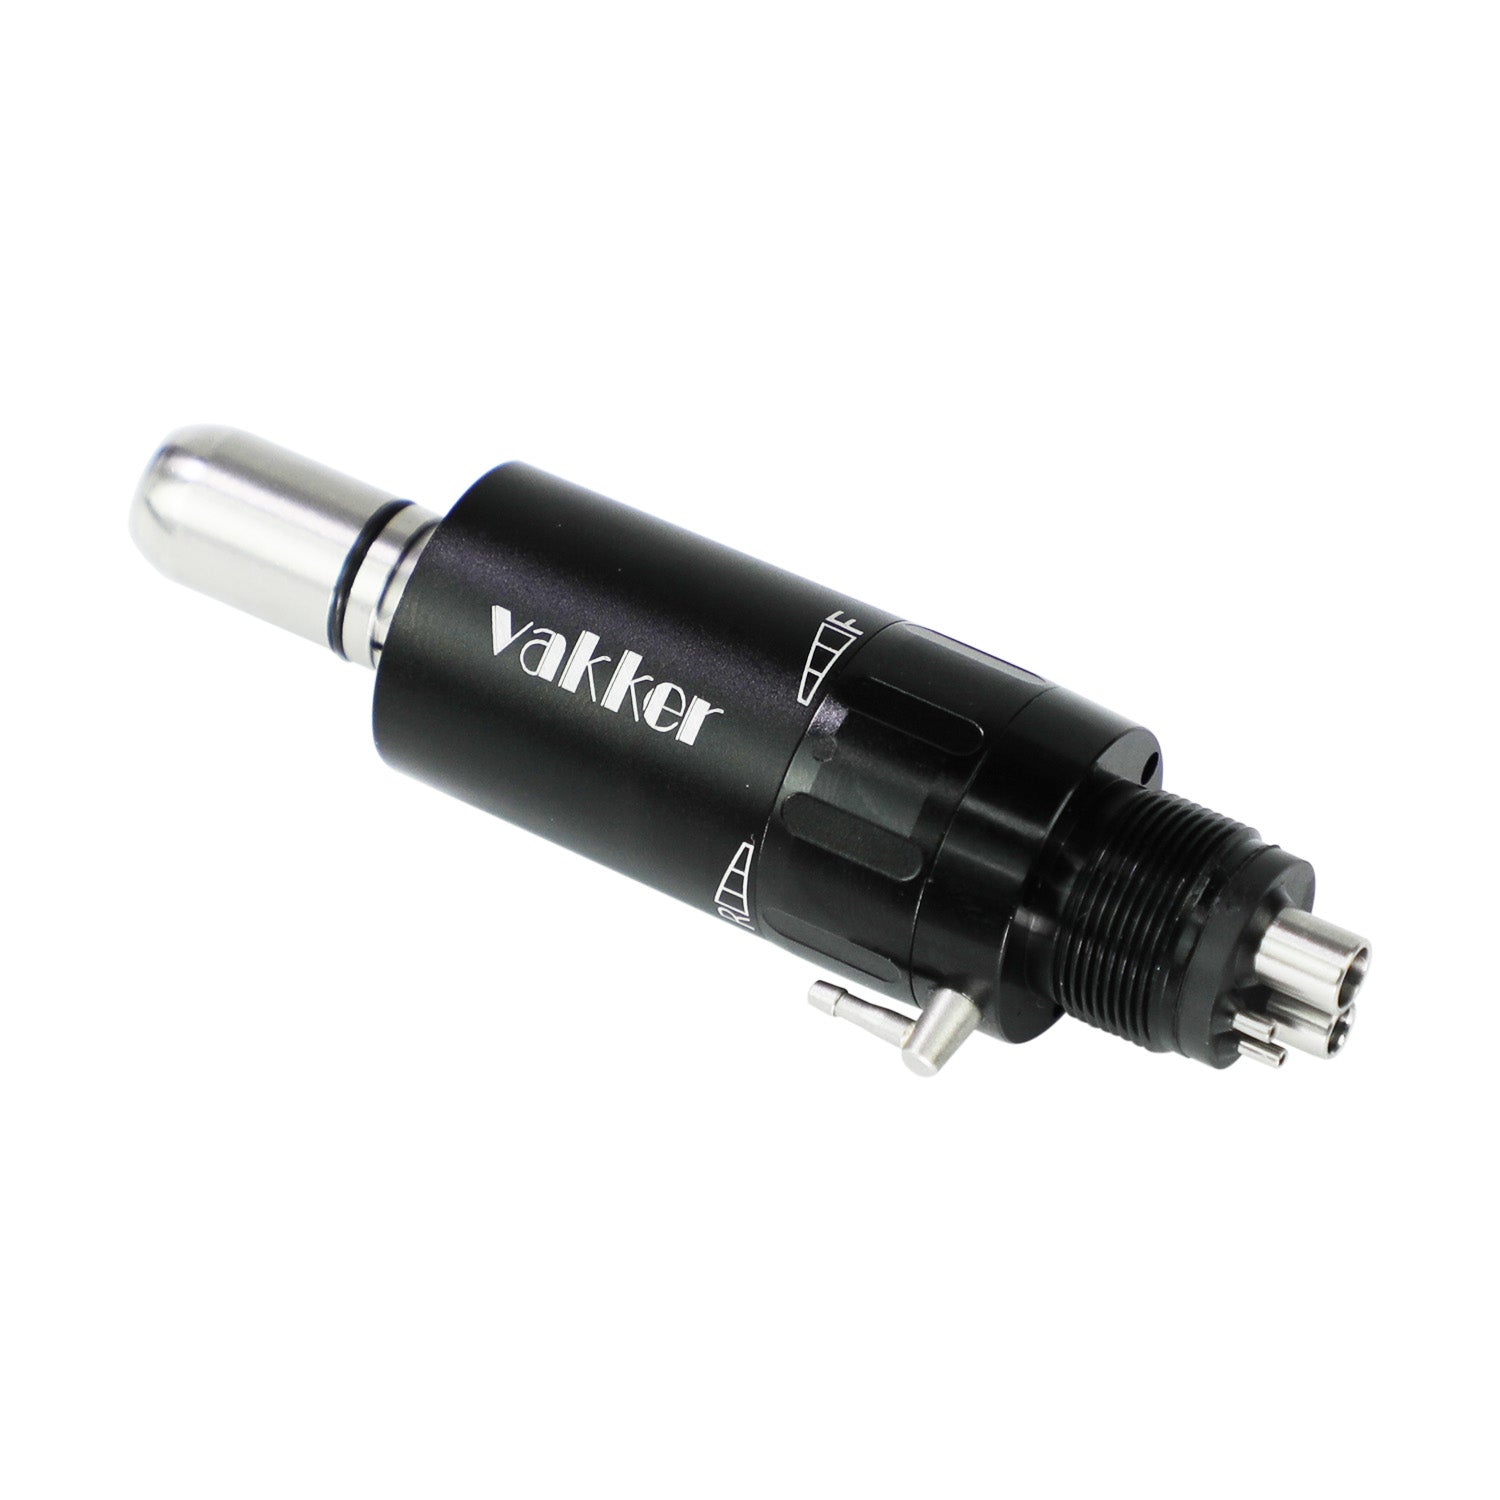 Vakker® 1:1 Low Speed Handpiece & Air Motor Set w/External Water Spray